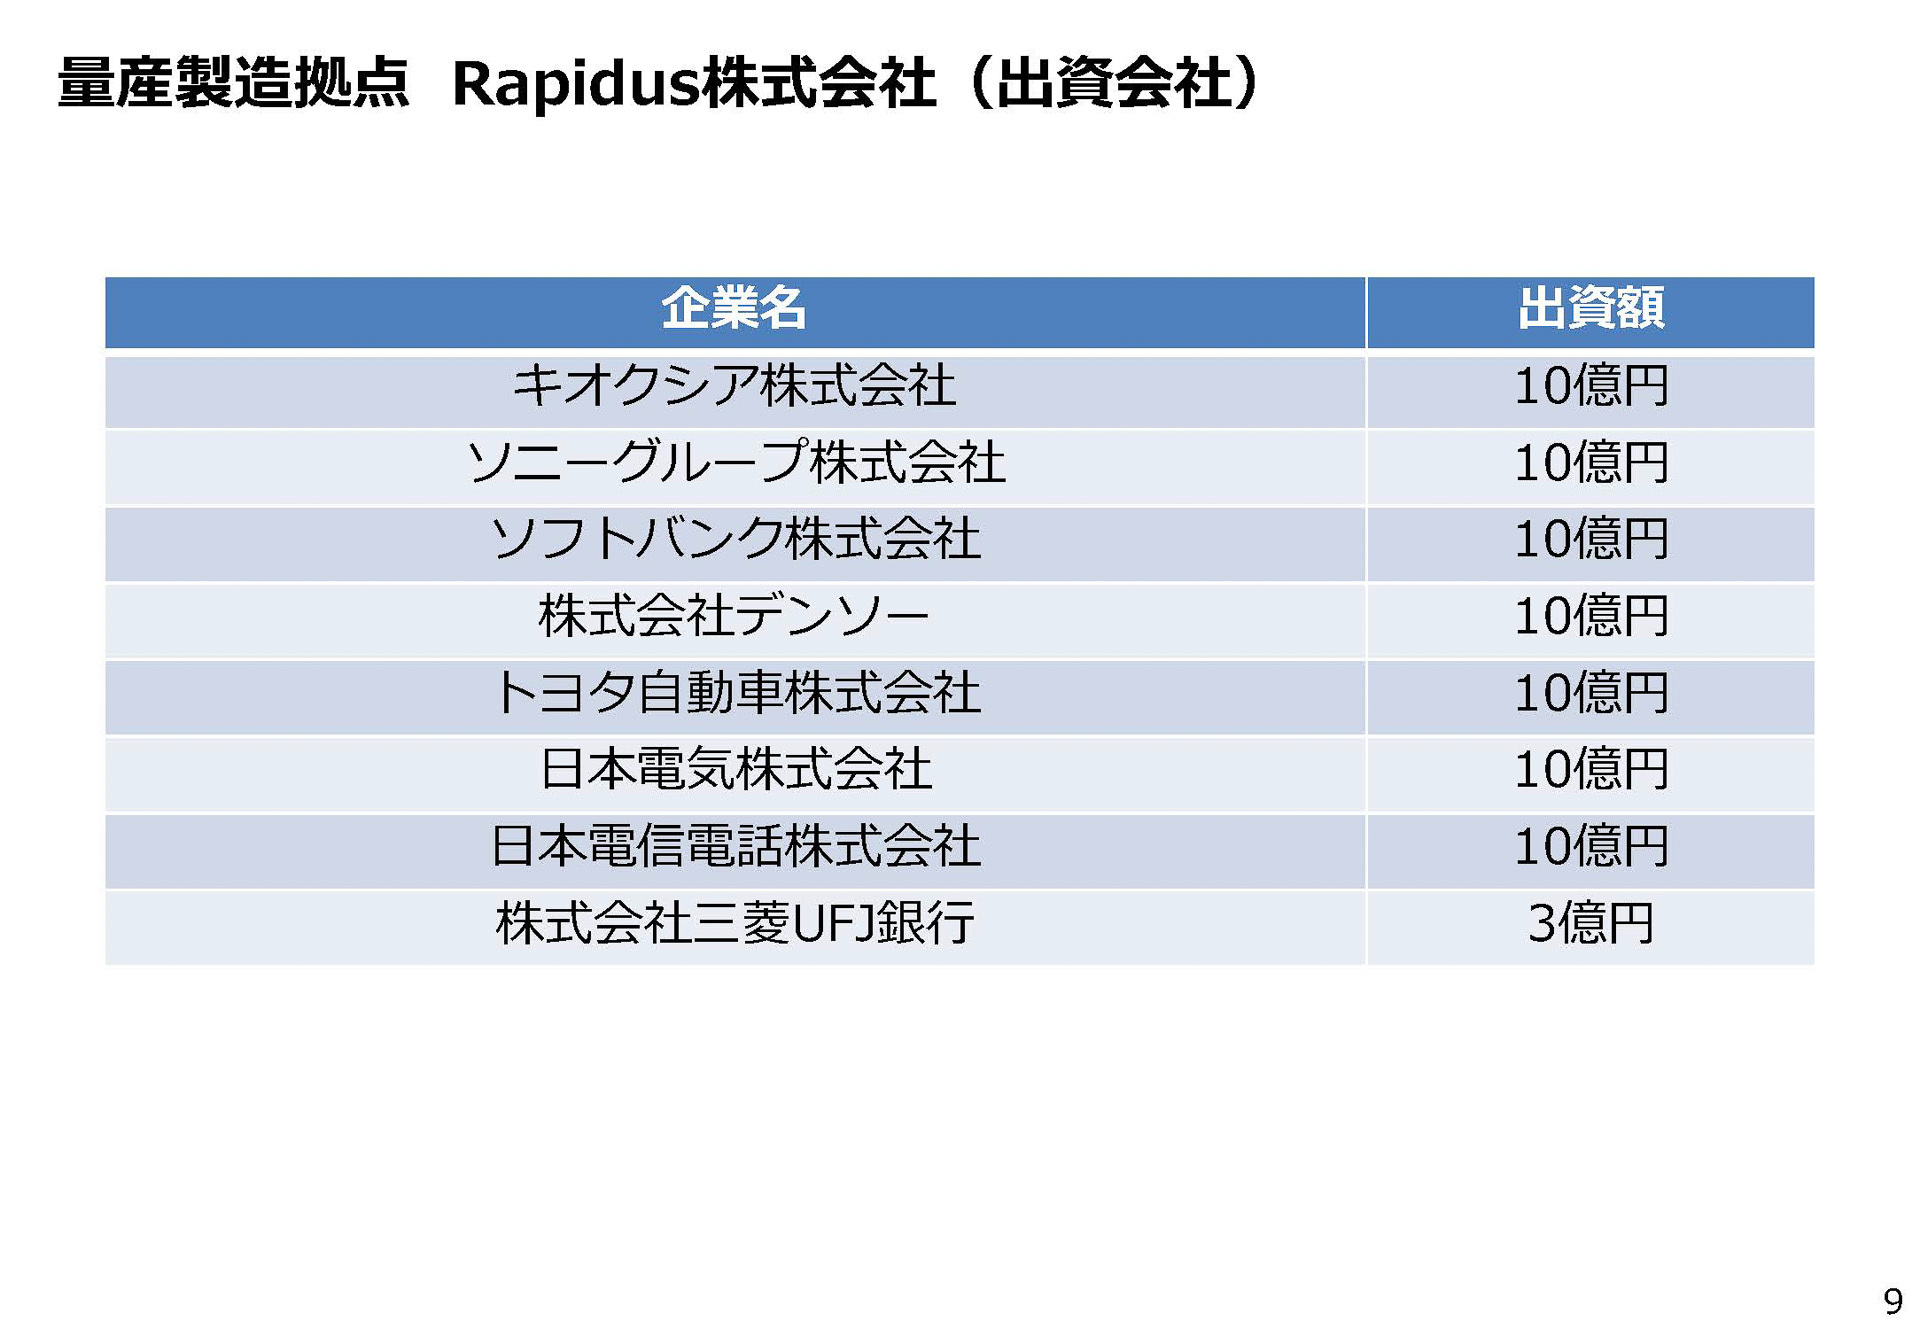 Rapidusの出資企業（出典：次世代半導体の設計・製造基盤確立に向けて、経産省）